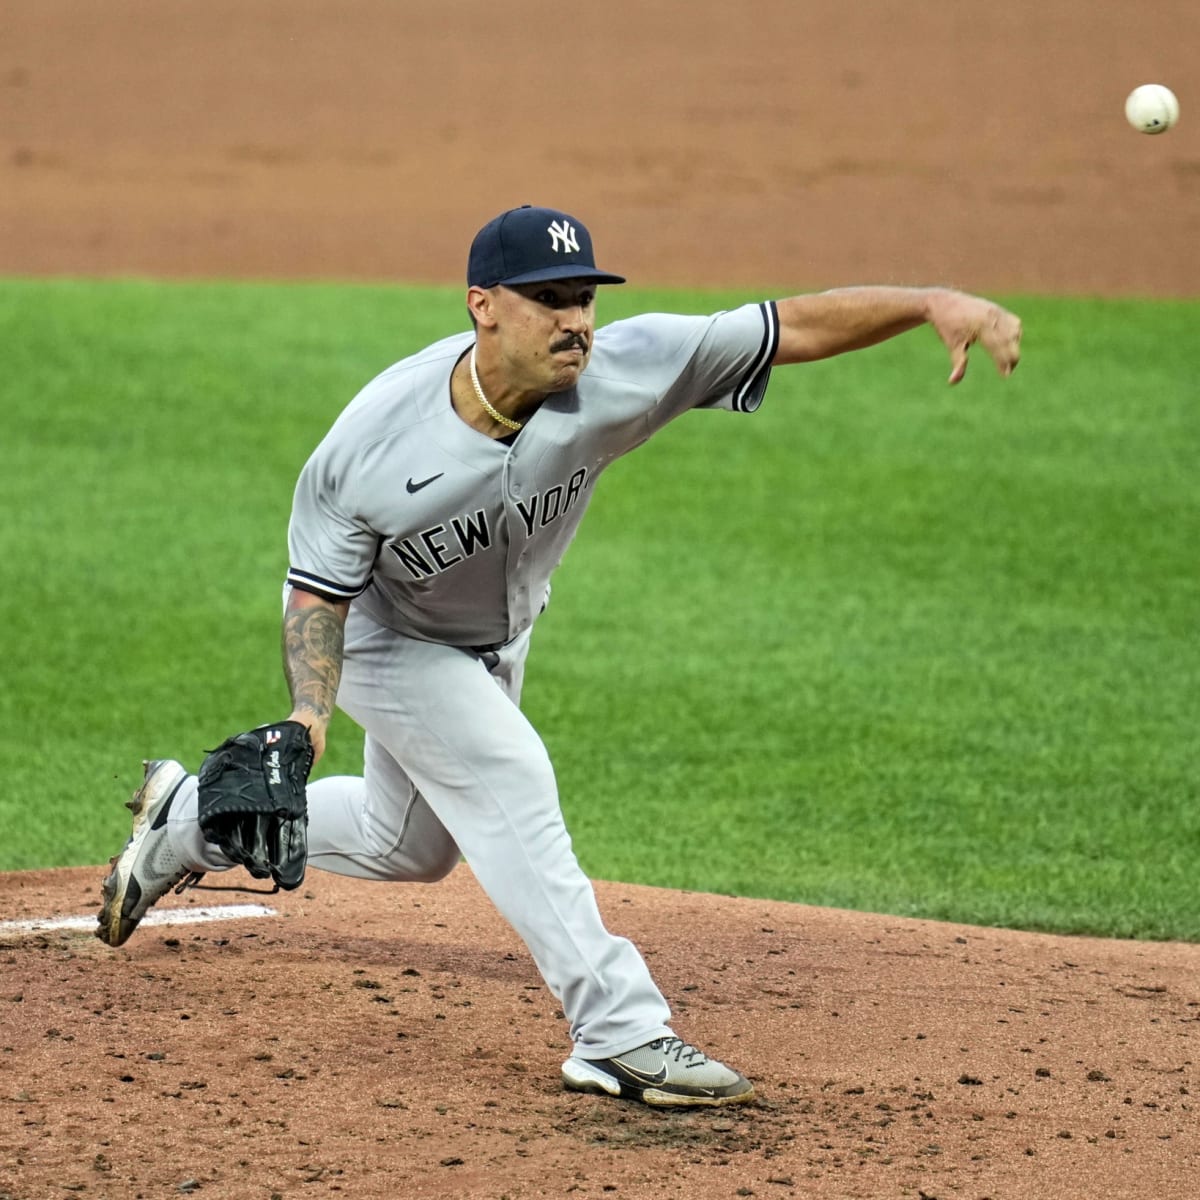 Nestor Cortes - MLB Starting pitcher - News, Stats, Bio and more